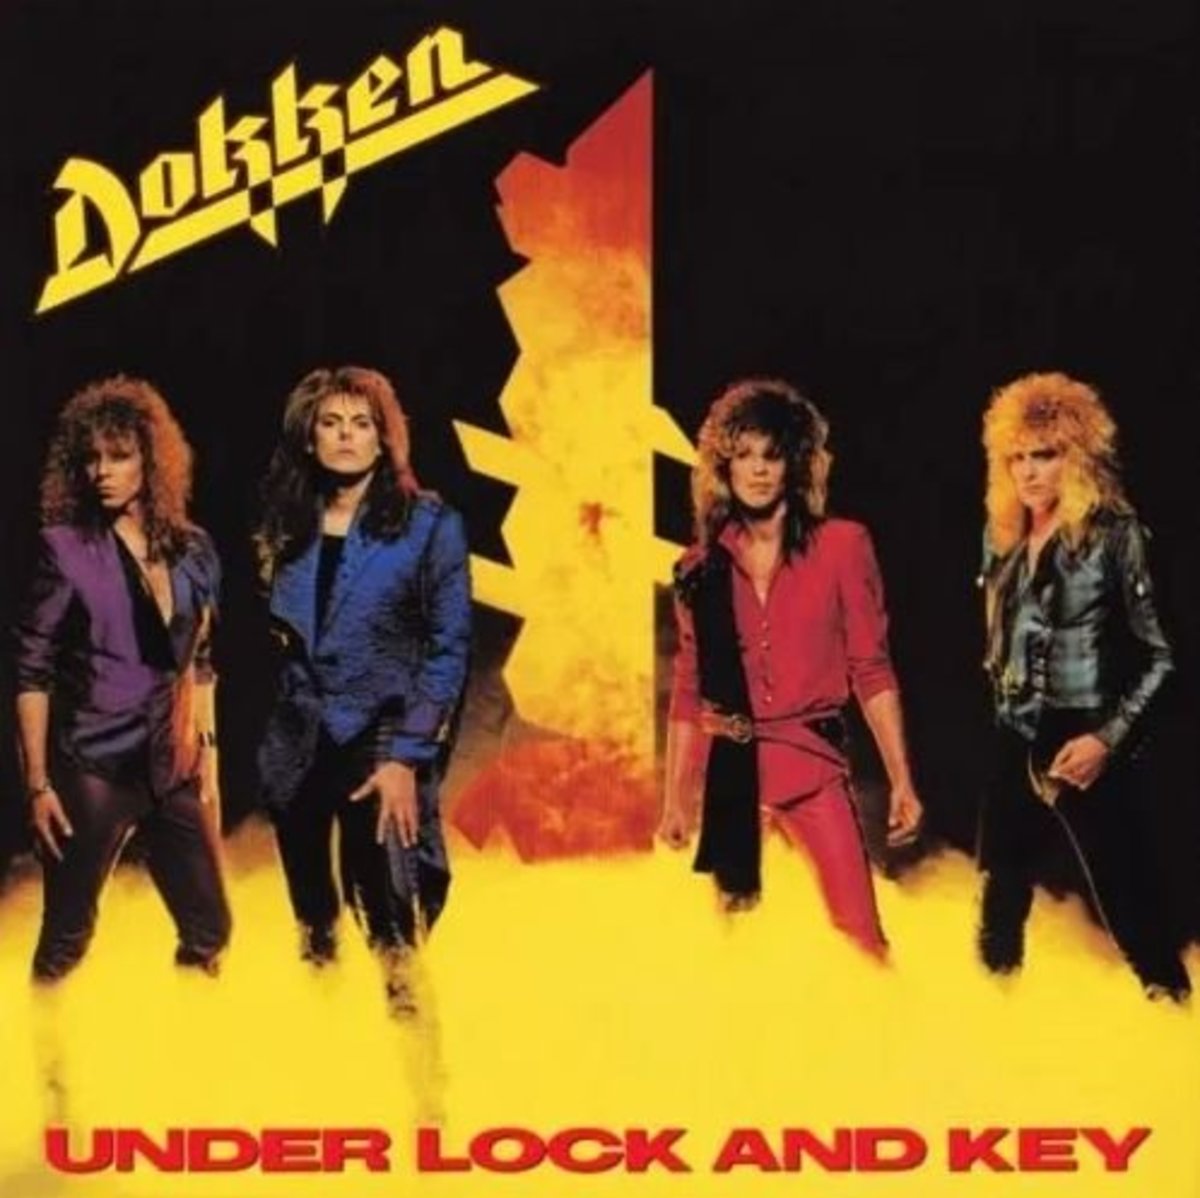 Dokken "Under Lock and Key" album cover